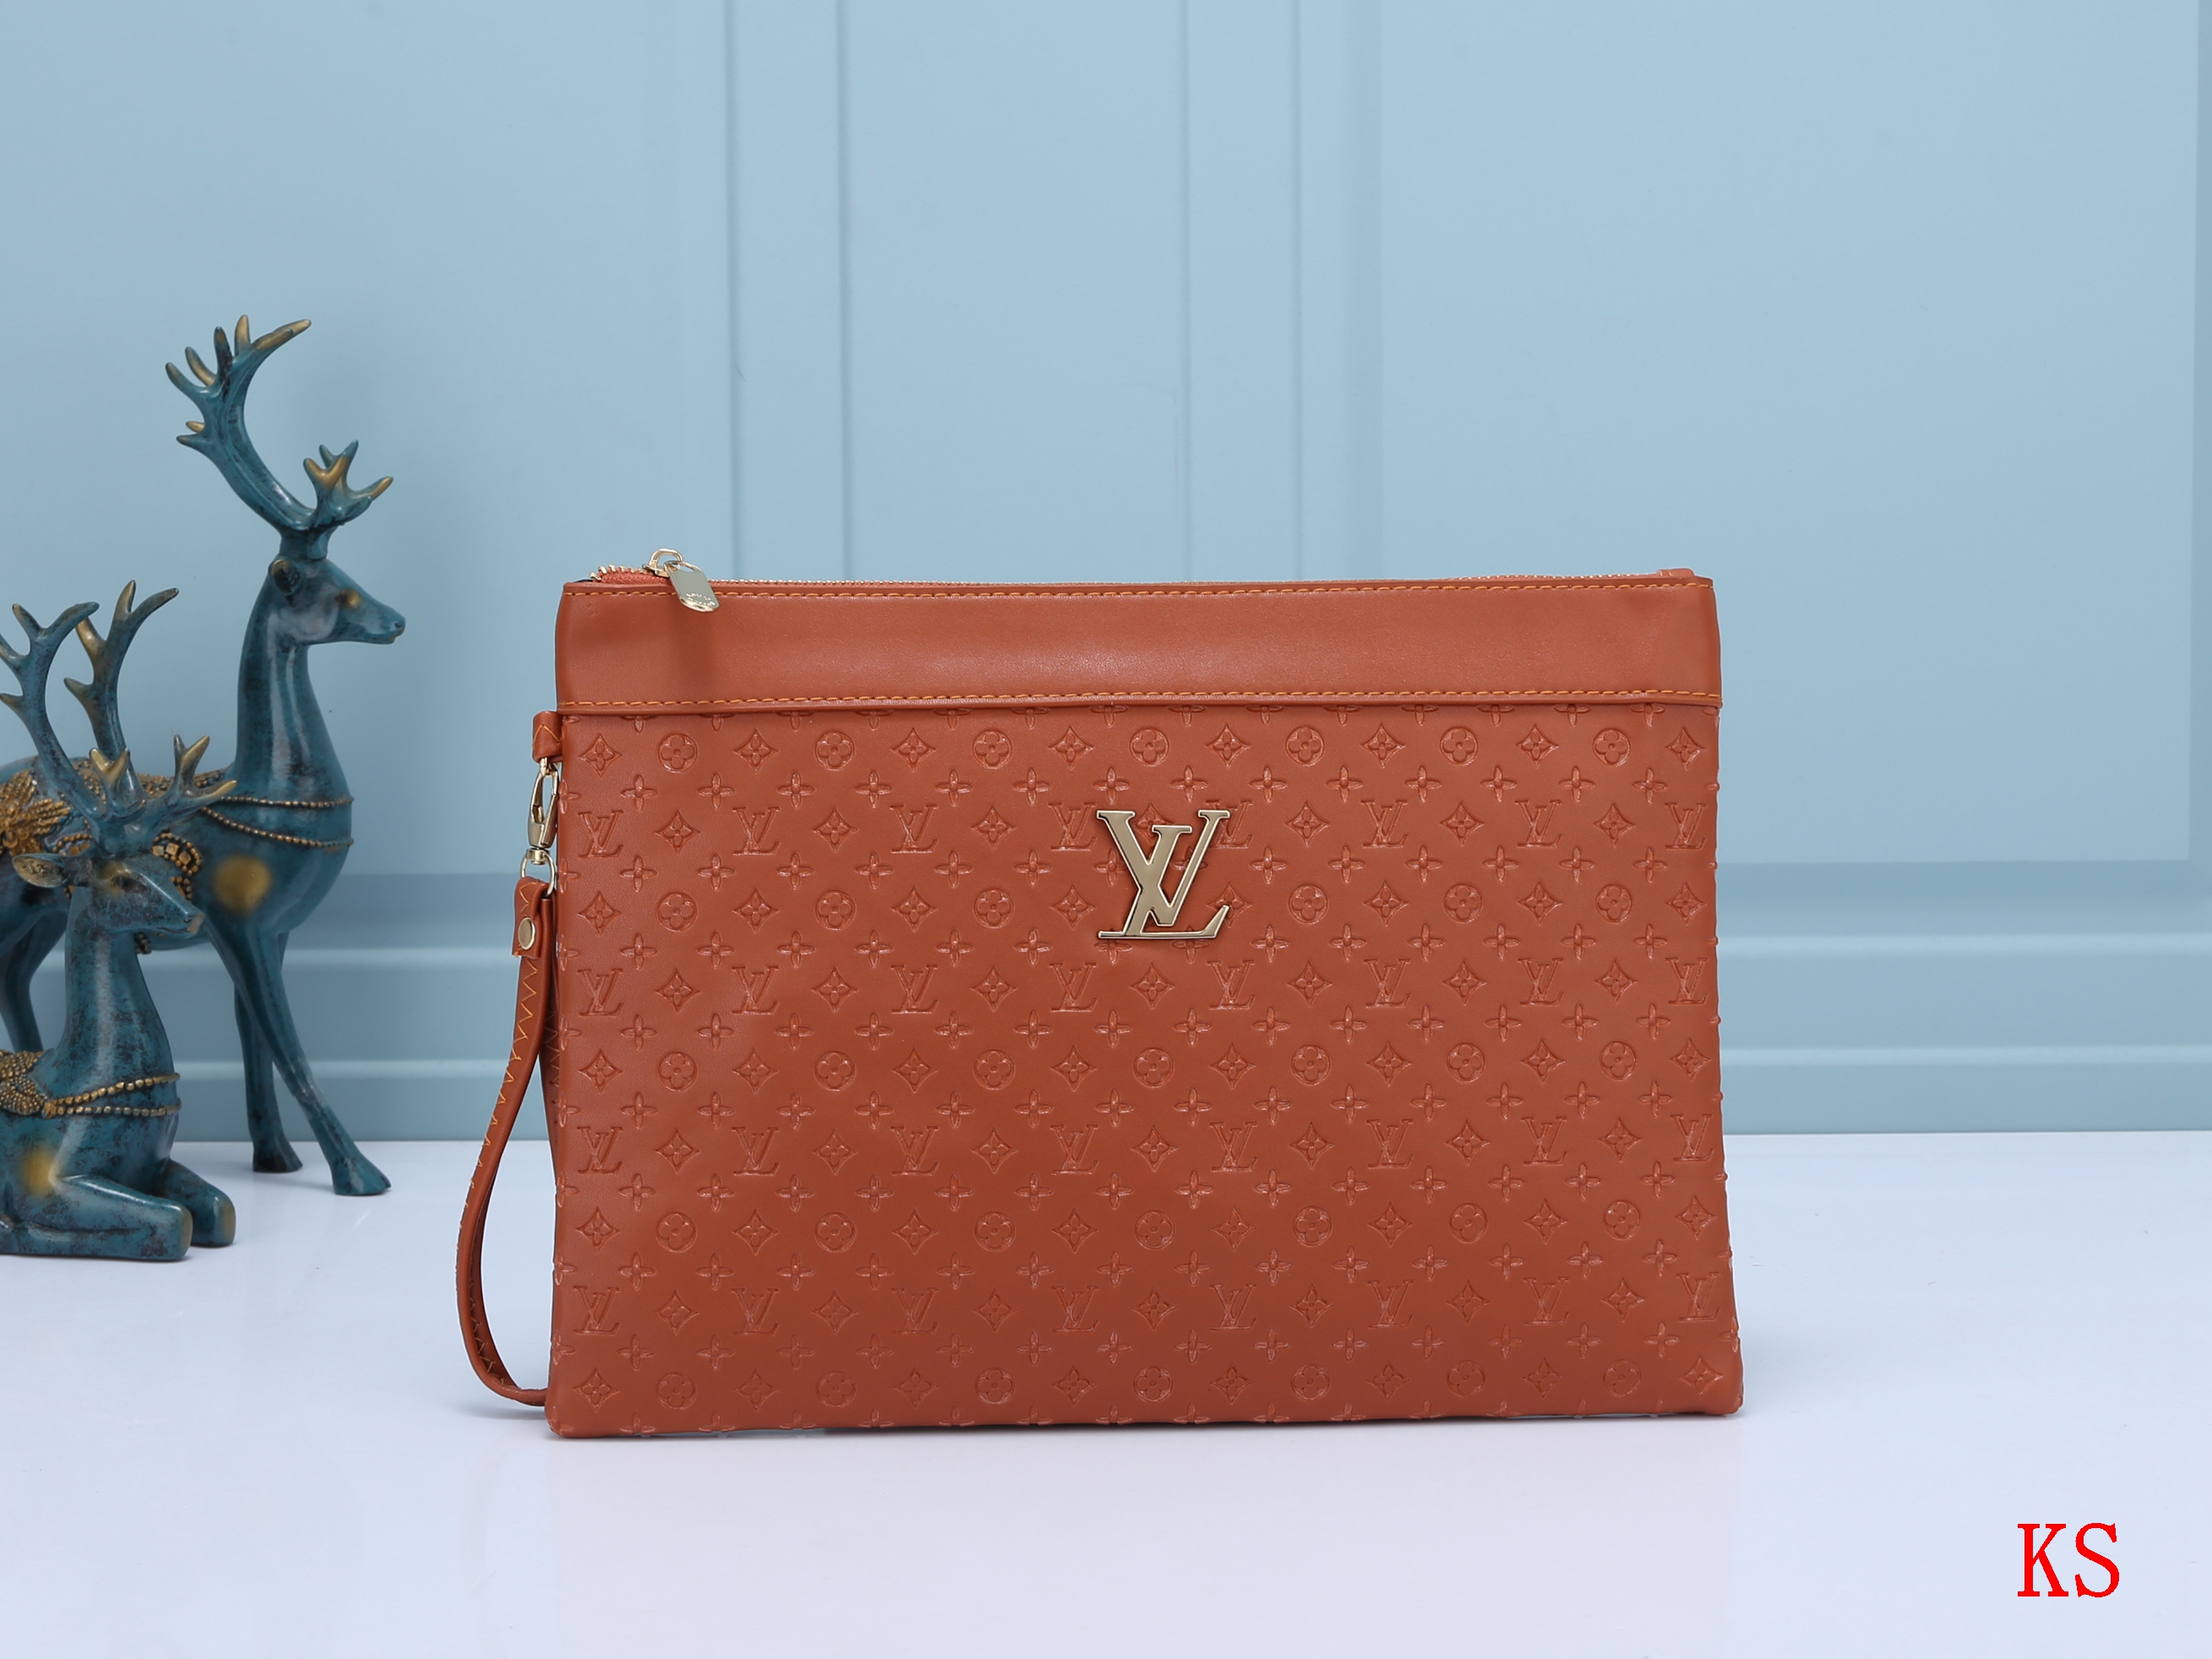 Louis Vuitton Clutch Bags For Women # 271192, cheap Louis Vuitton Wallet, only $23!